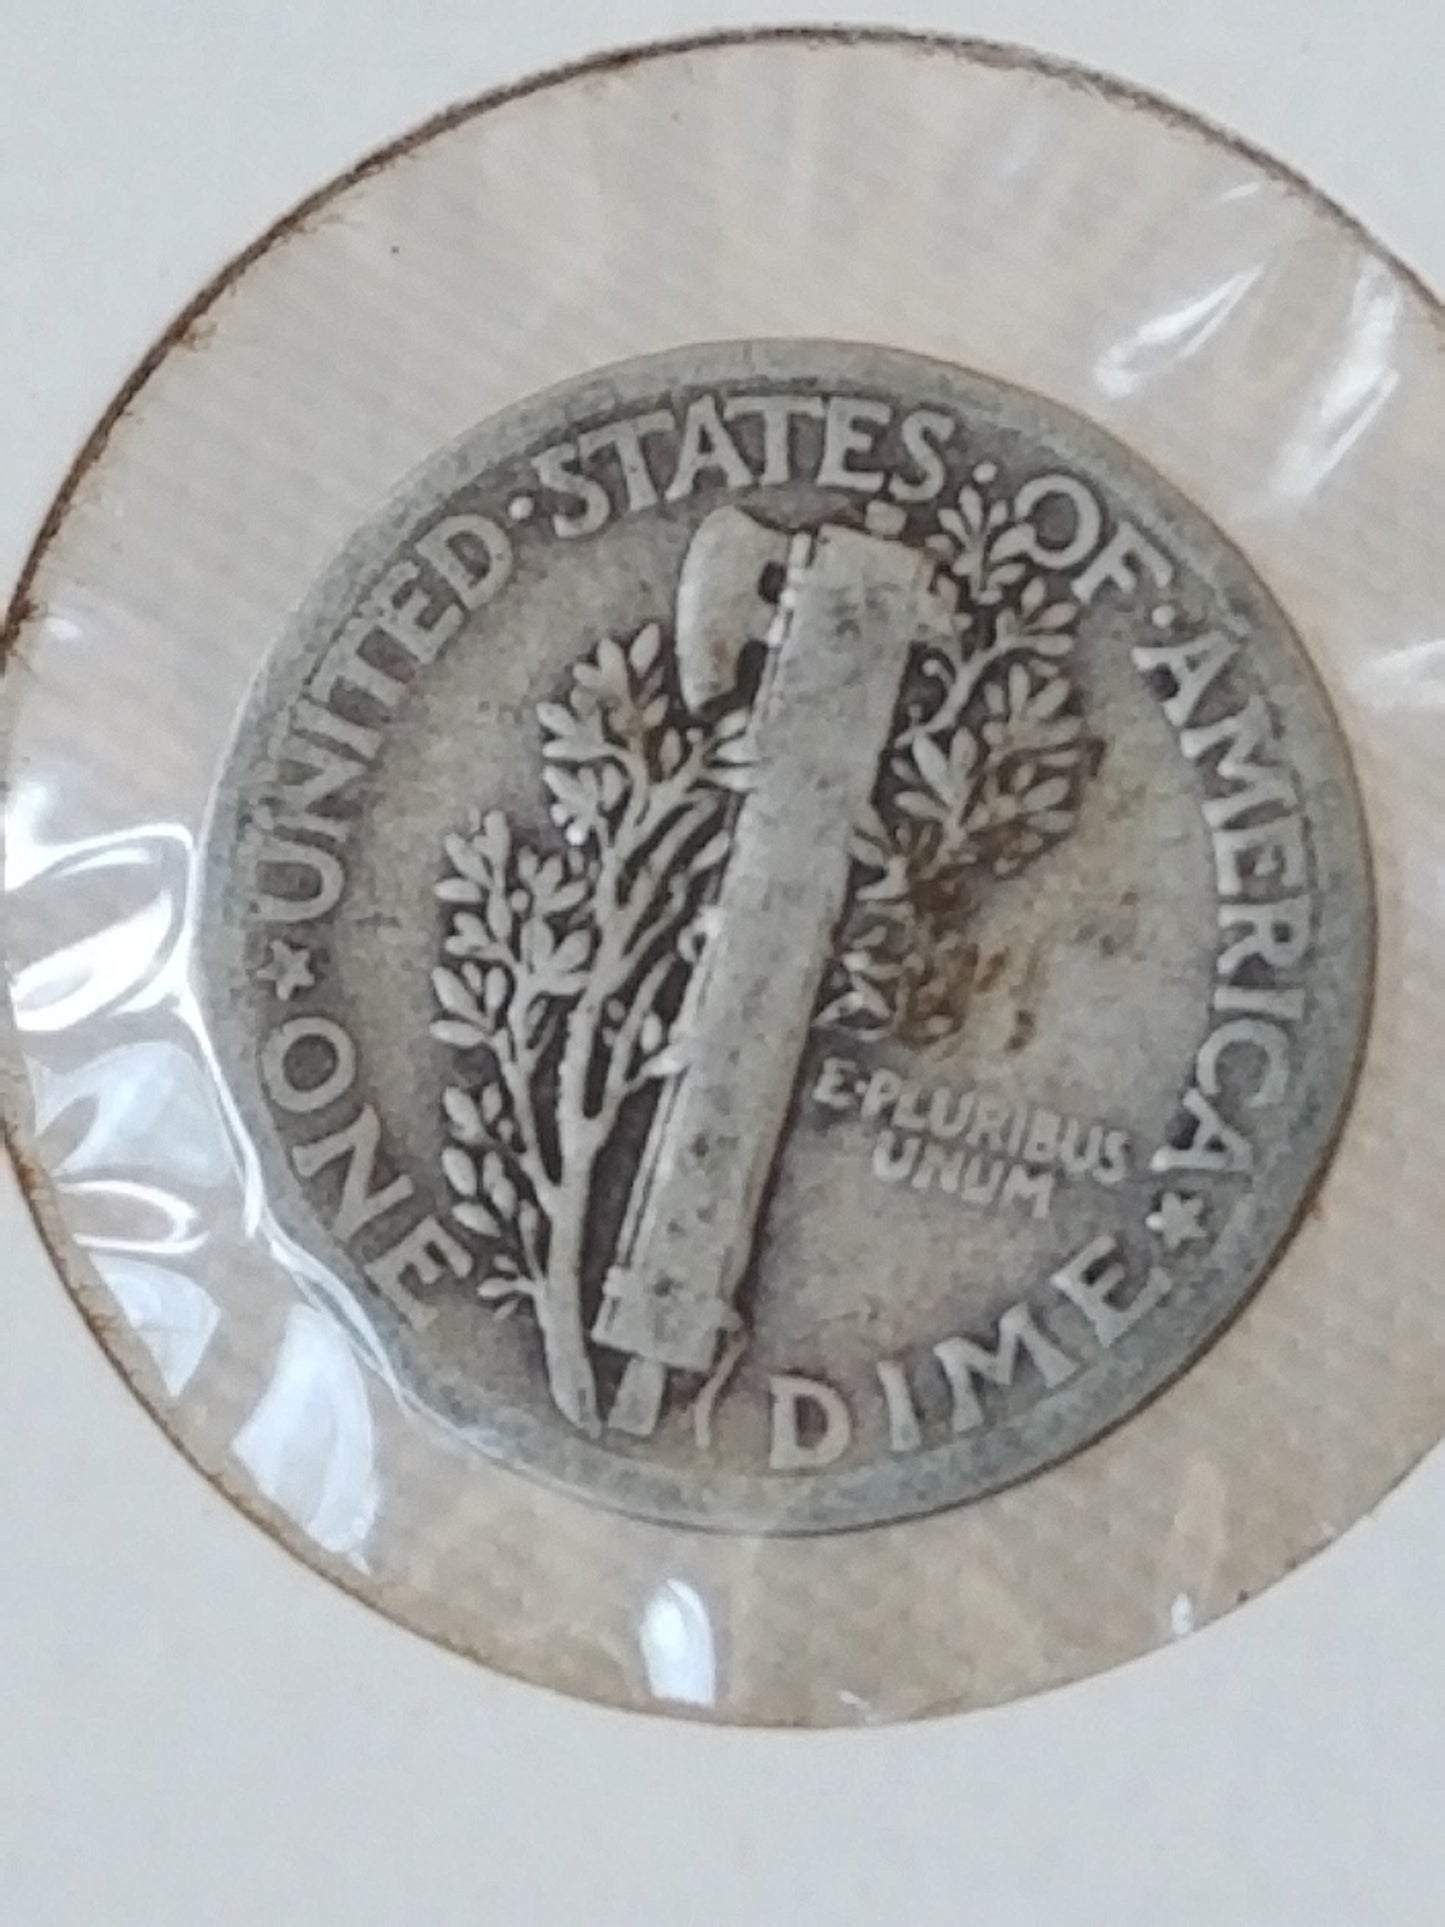 1925 Silver Mercury Dime